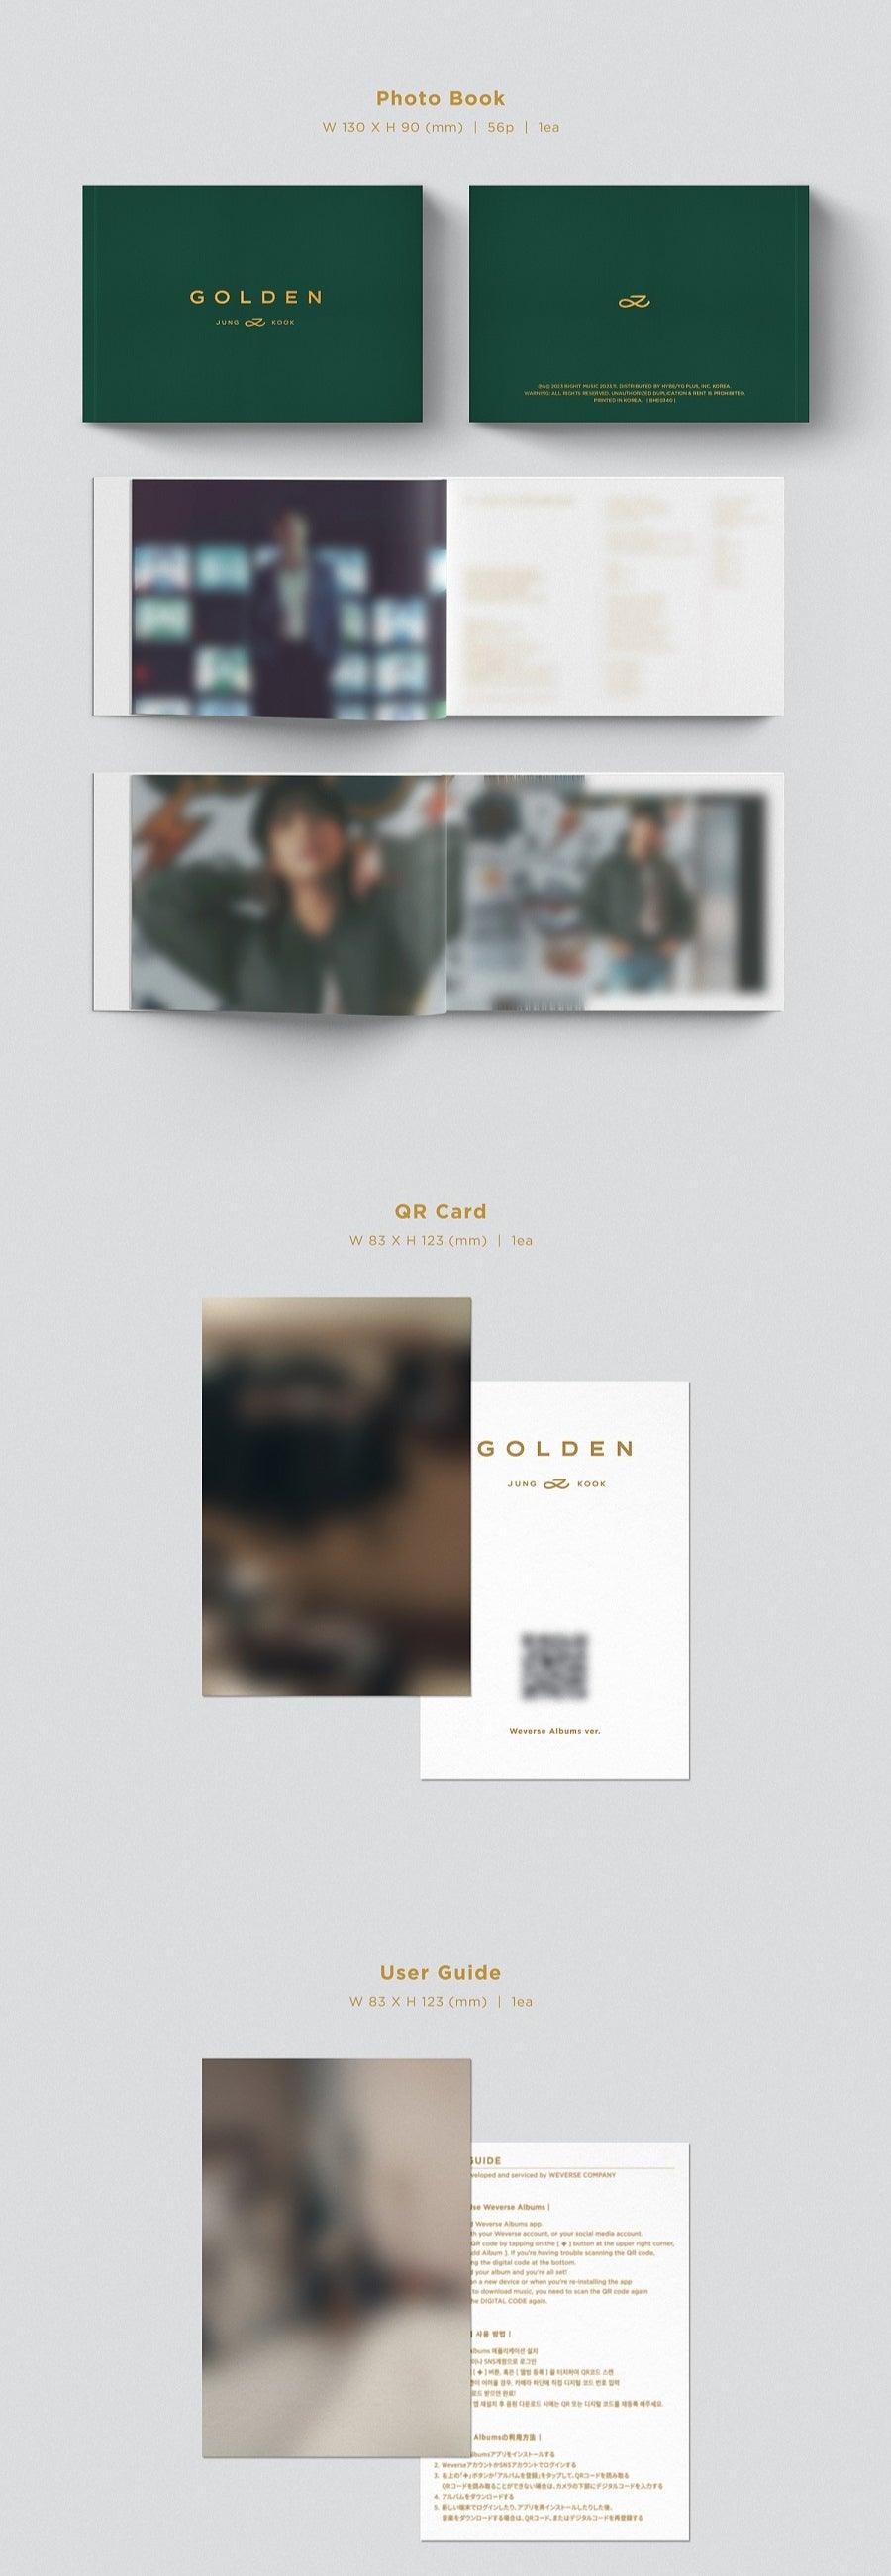 JUNGKOOK (BTS) - [GOLDEN] (Weverse album) - KAEPJJANG SHOP (캡짱 숍)